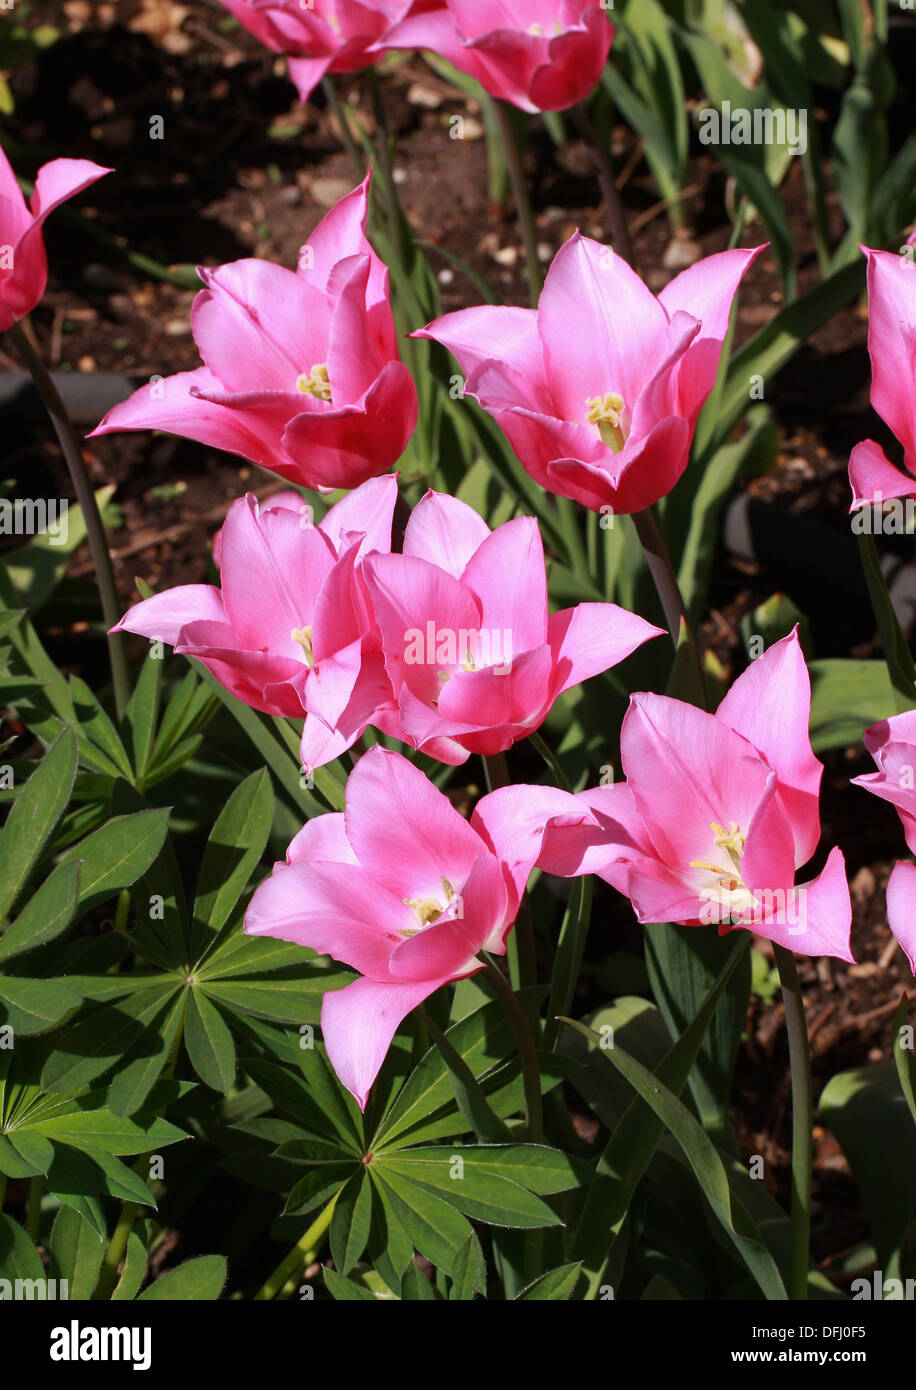 Rosa Tulpen, Tulipa 'China Pink', Liliaceae. Sorte. Stockfoto